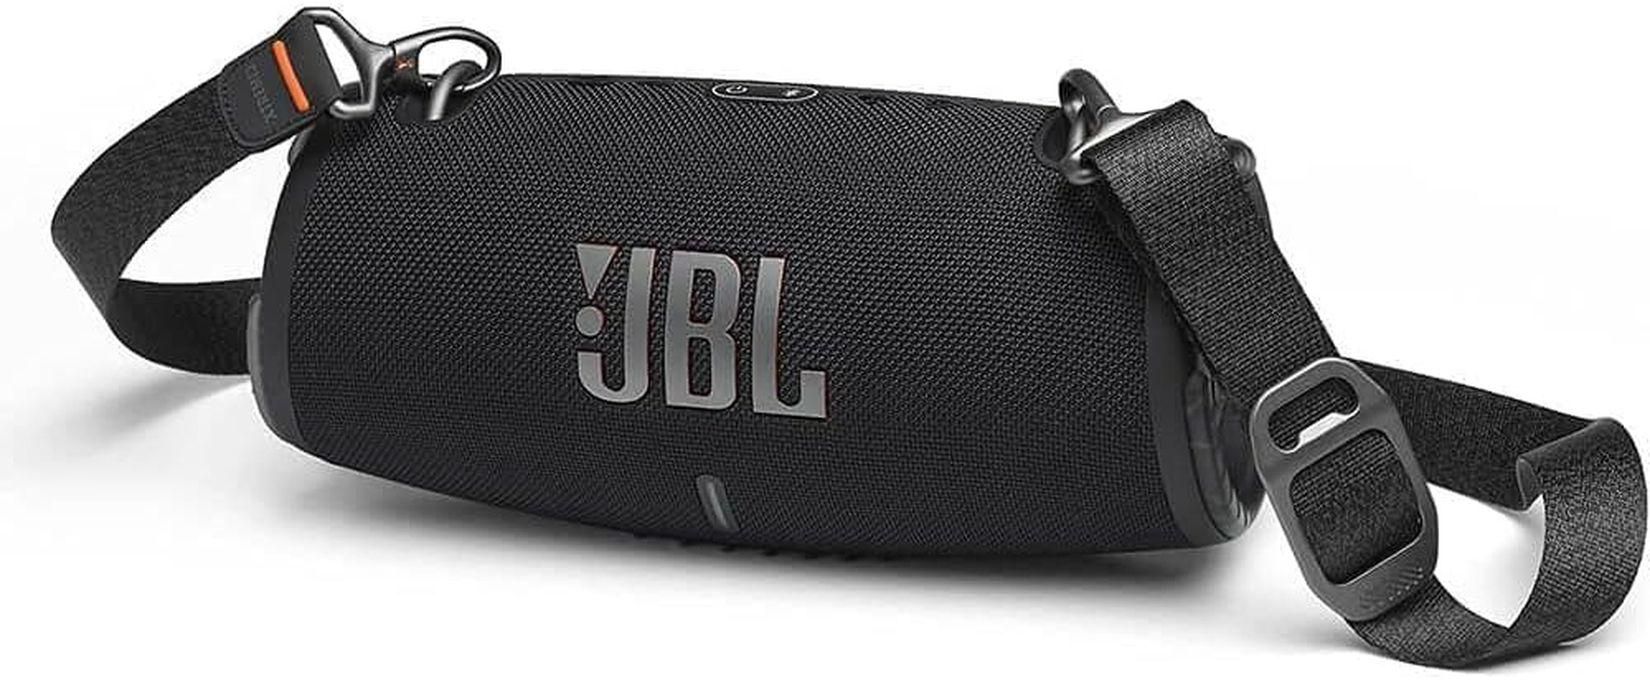 JBL JBL Xtreme 3 Portable Waterproof Speaker With Massive JBL Original Pro Sound - Black